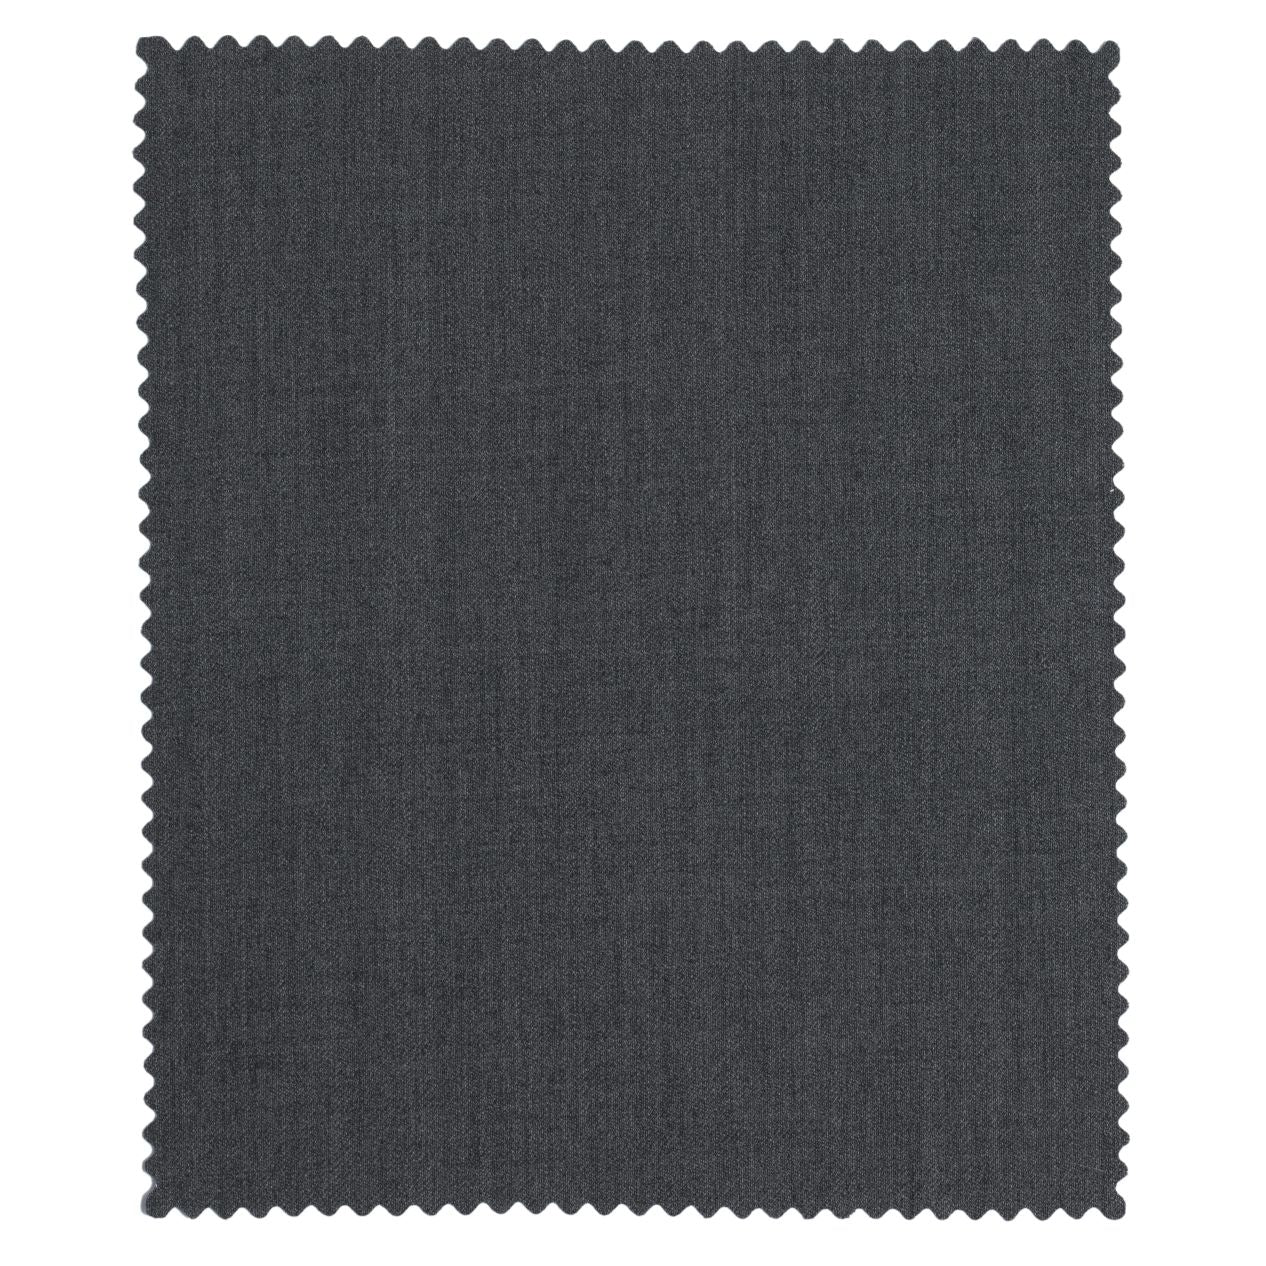 BIG FIT Super 120s Wool Gabardine Comfort-EZE Trouser in Medium Grey (Plain Front Model) by Ballin